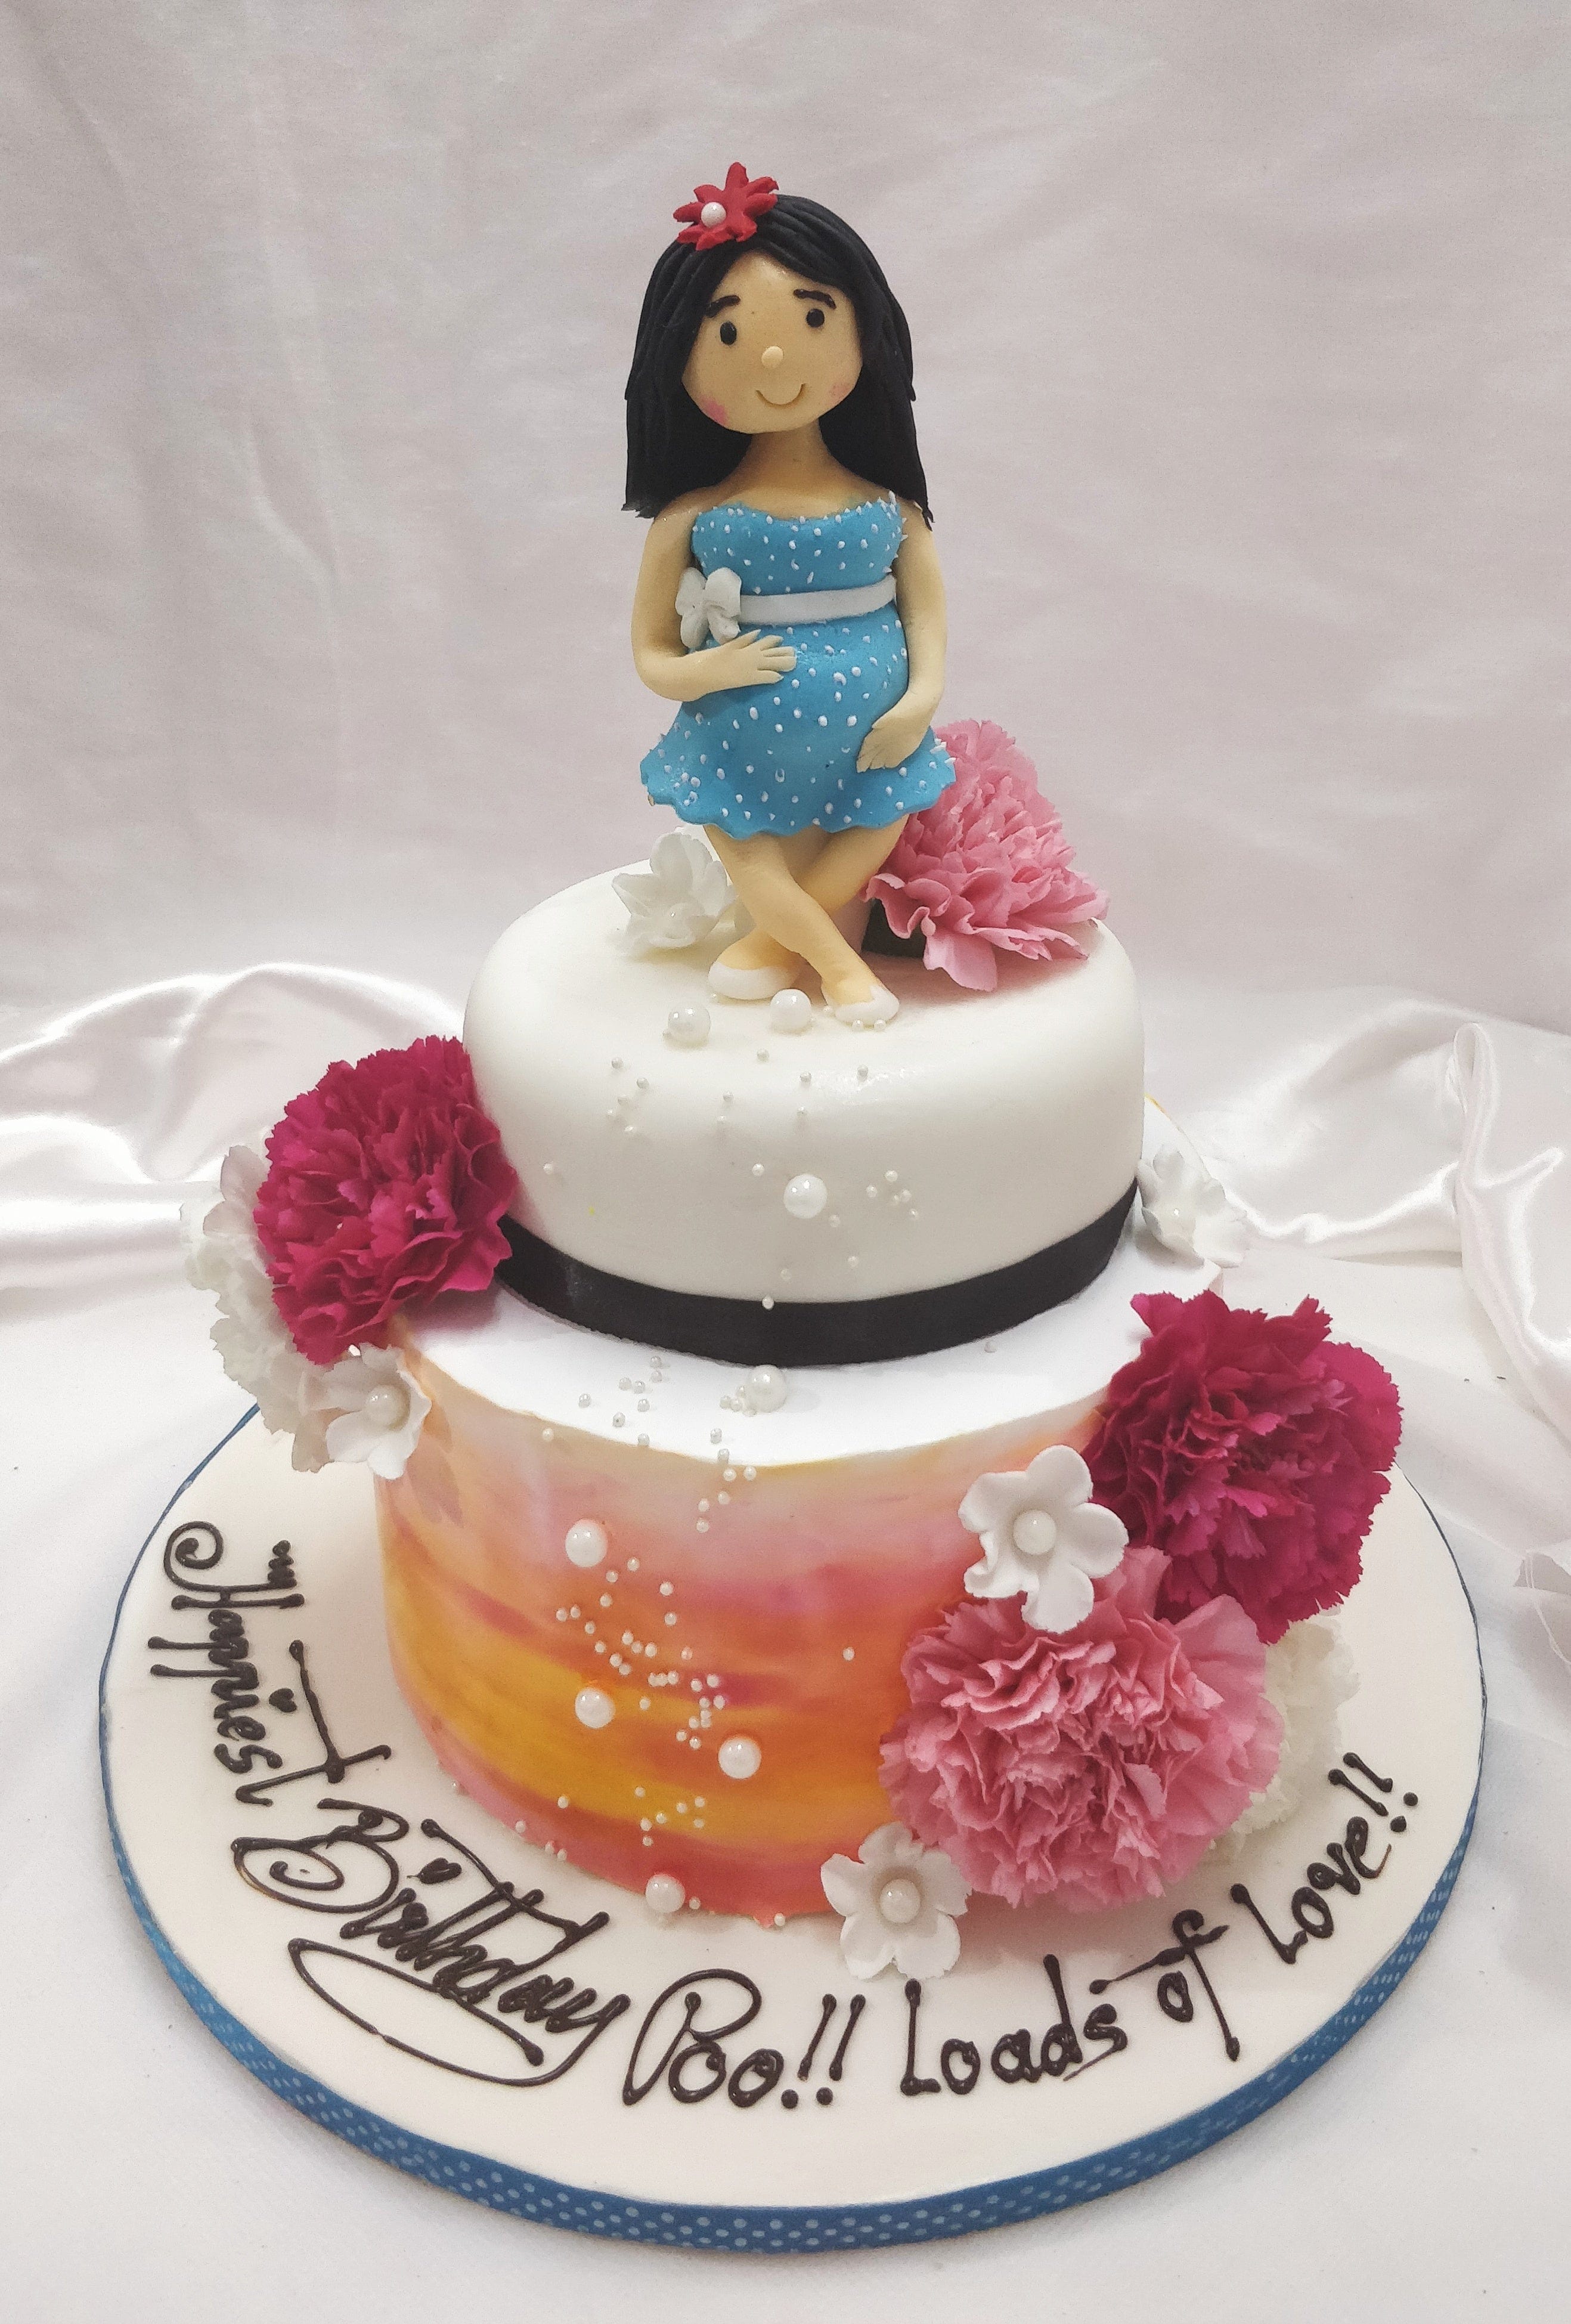 Cakes recipes, chocolate cake, sponge cake, decorating